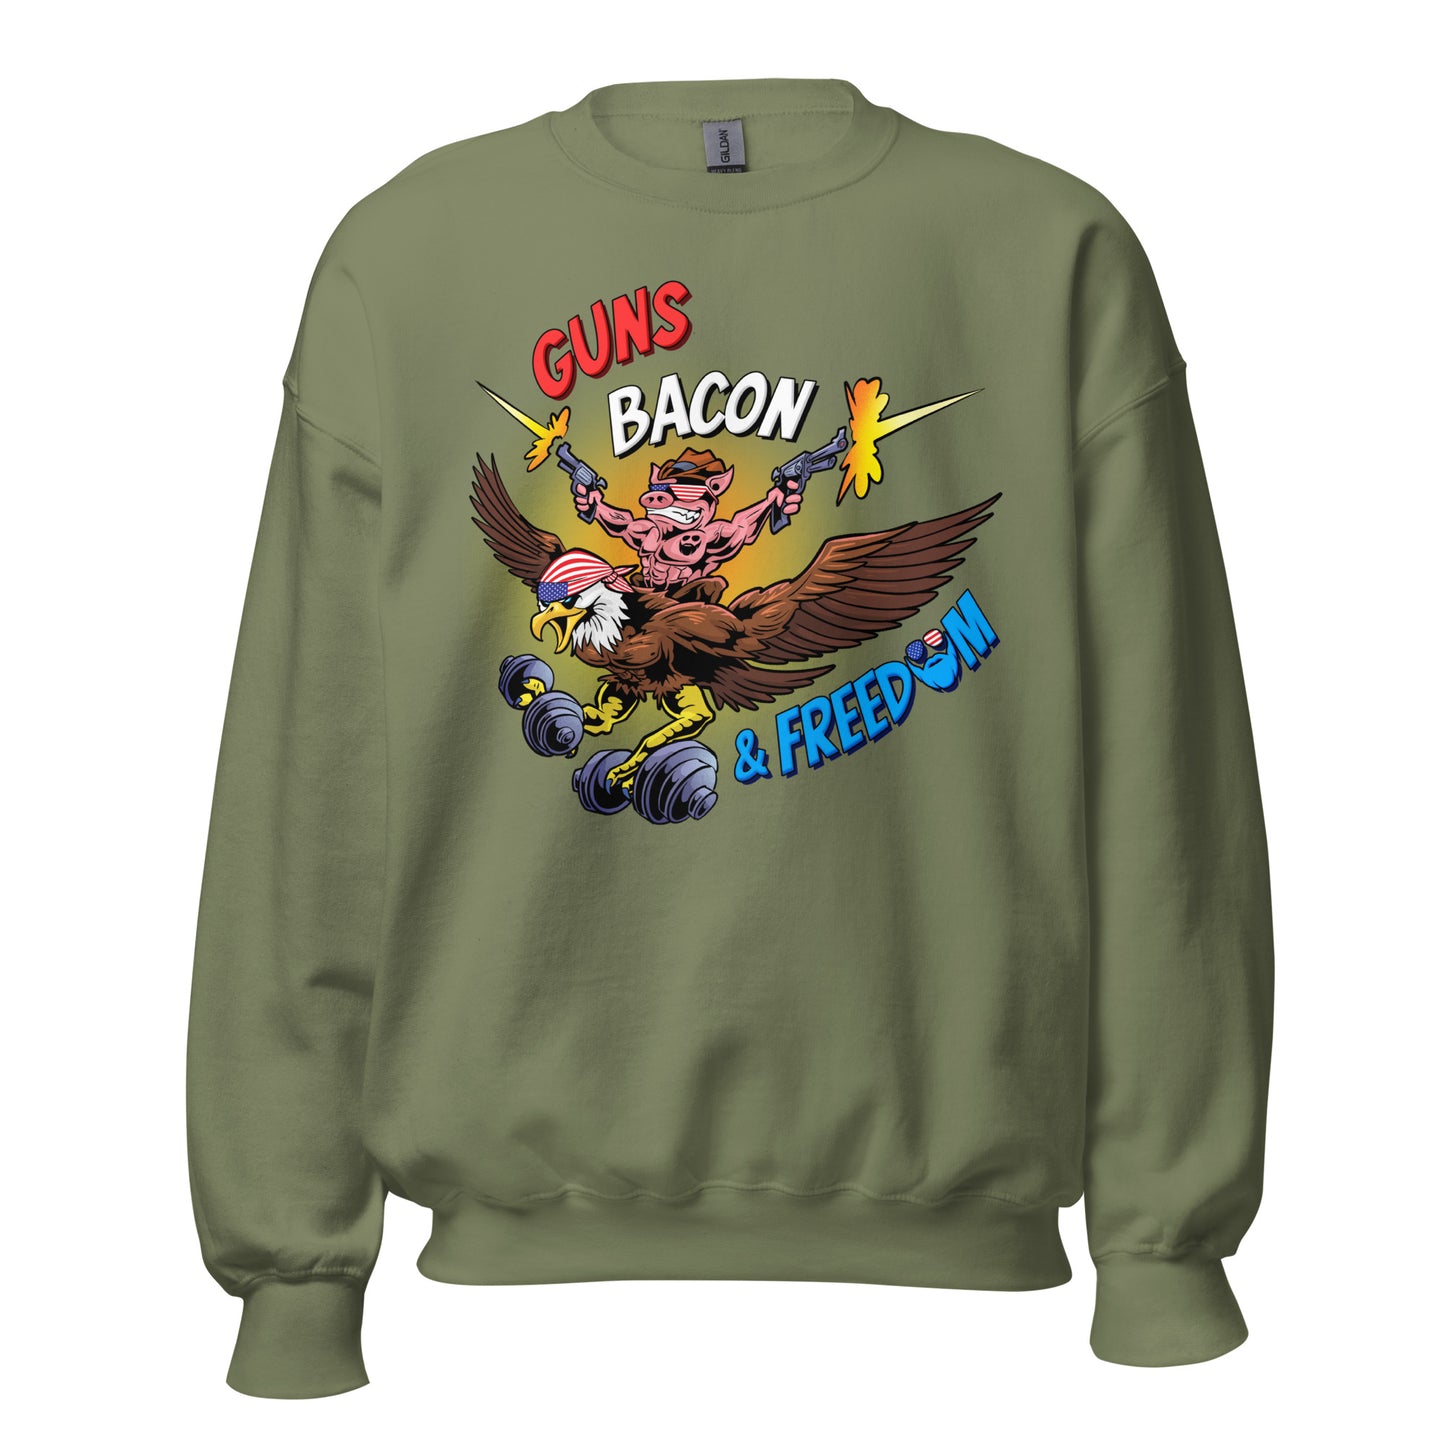 Guns, Bacon & Freedom (Image) Sweatshirt